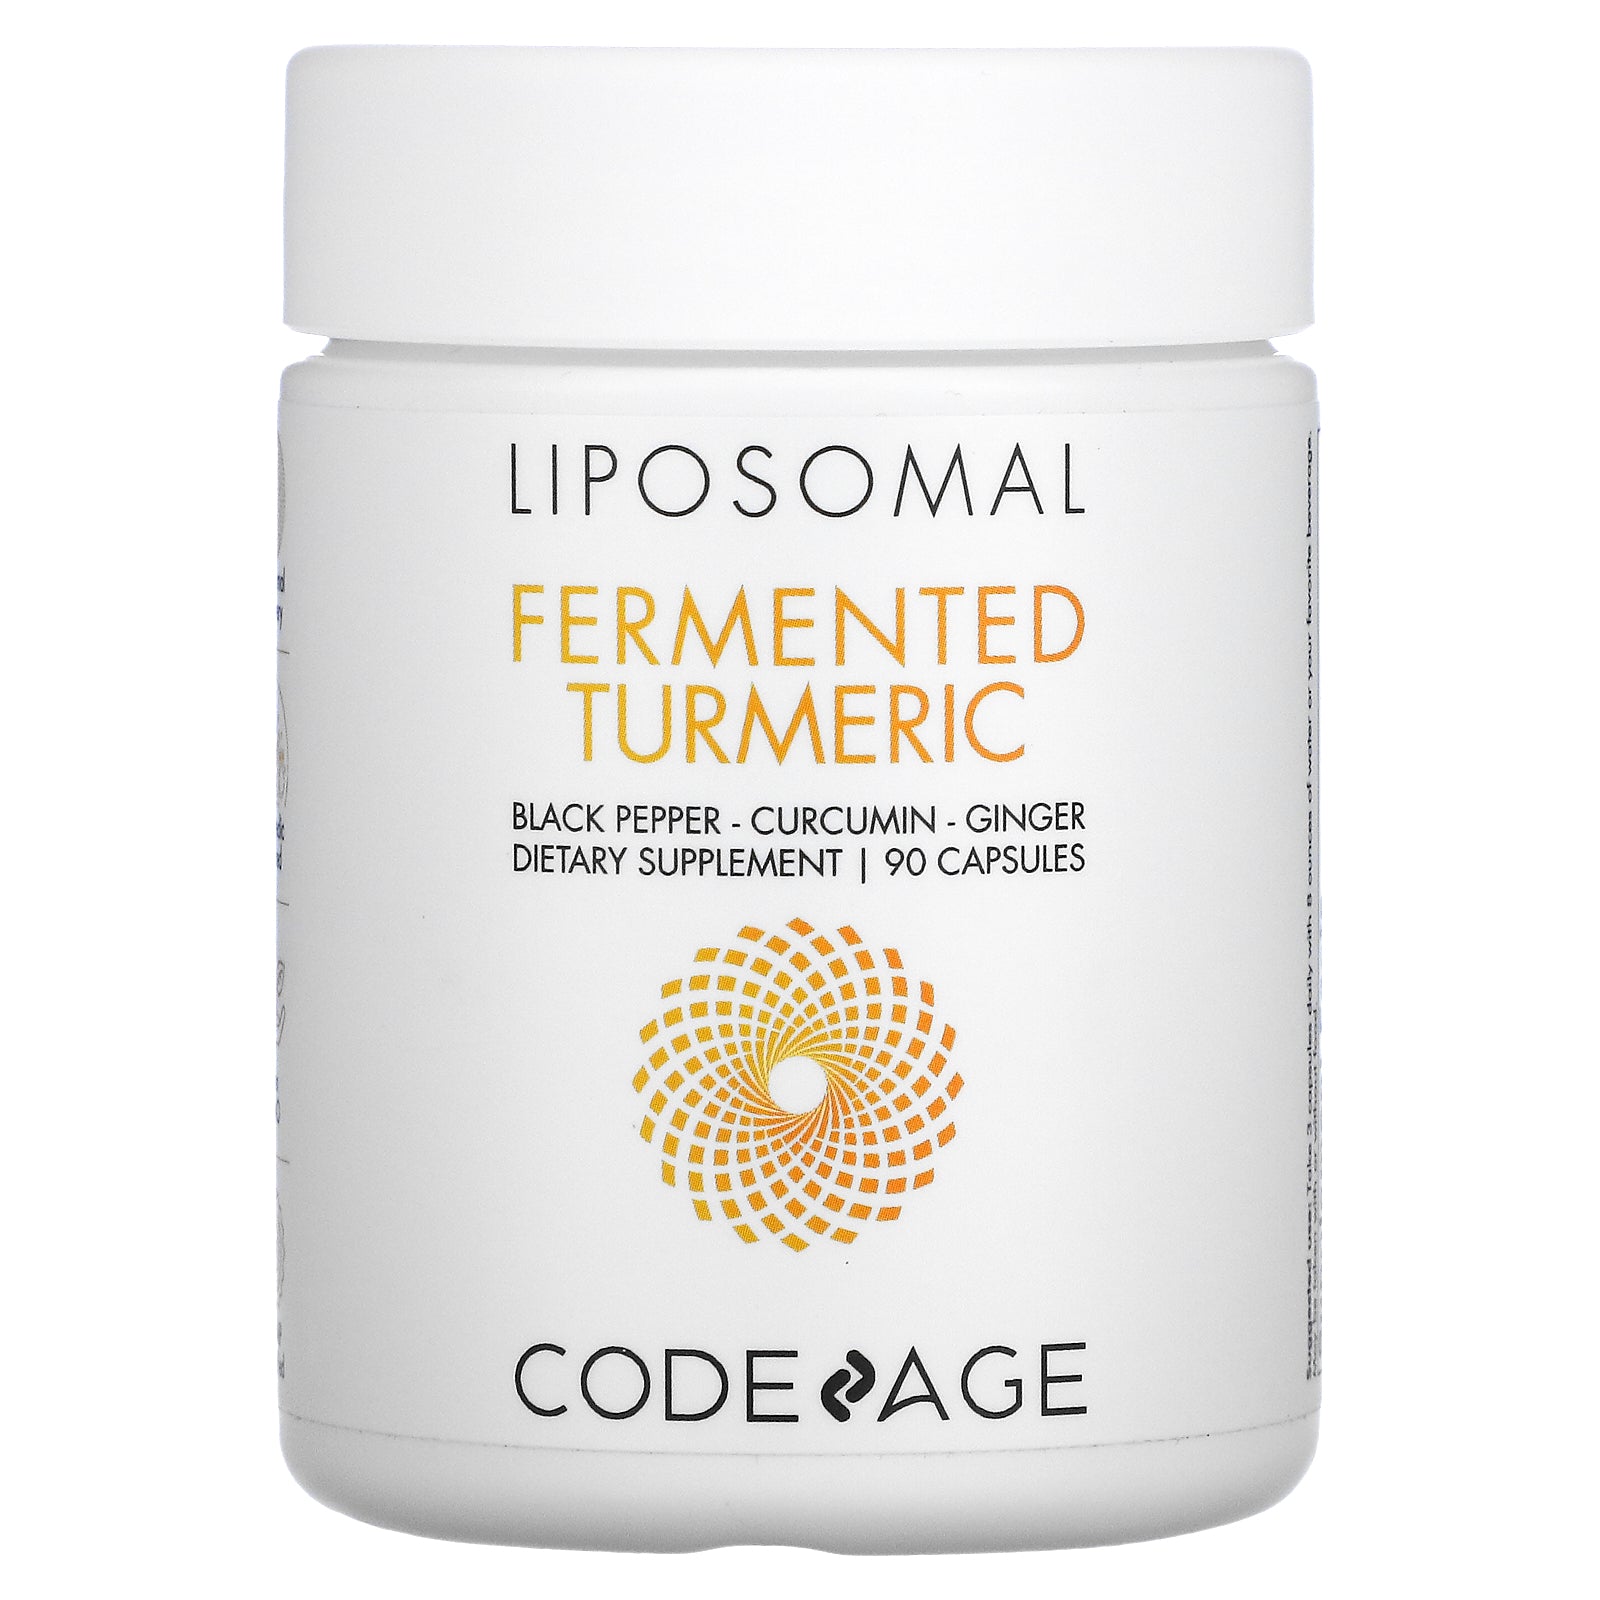 CodeAge, Liposomal, Fermented Turmeric Capsules